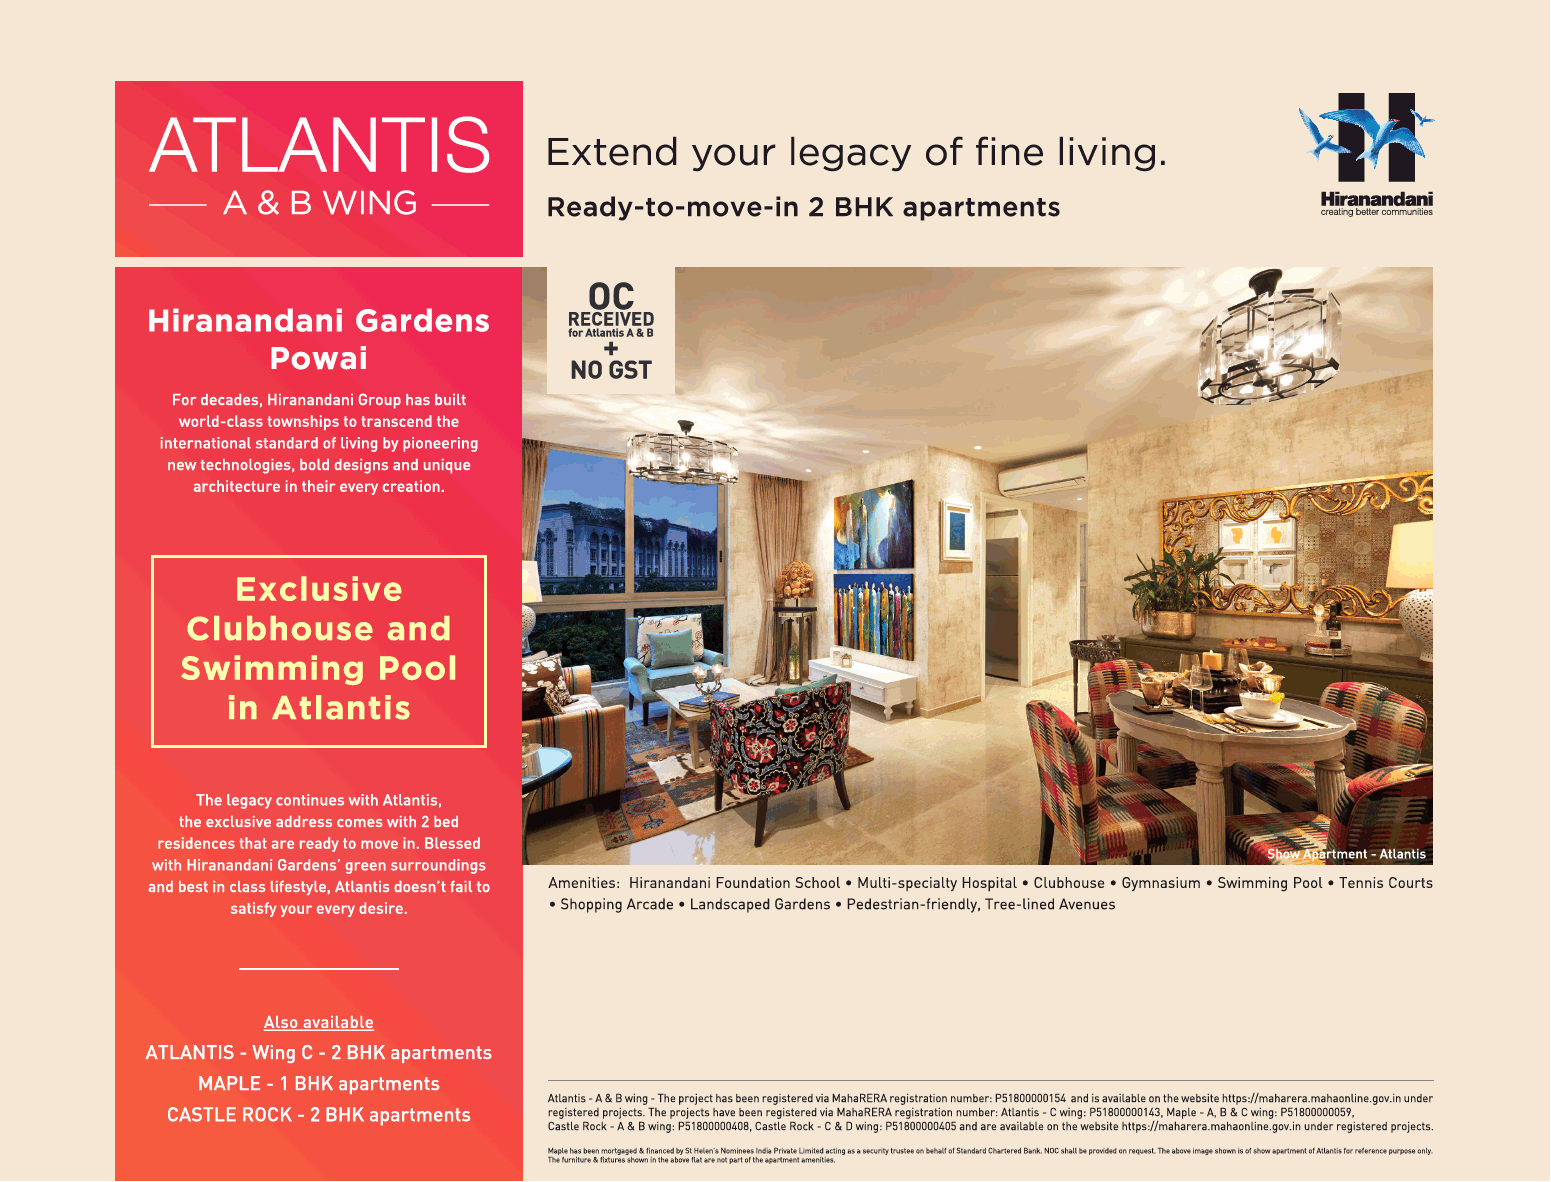 Extend your legacy of fine livings at Hiranandani Atlantis in Mumbai